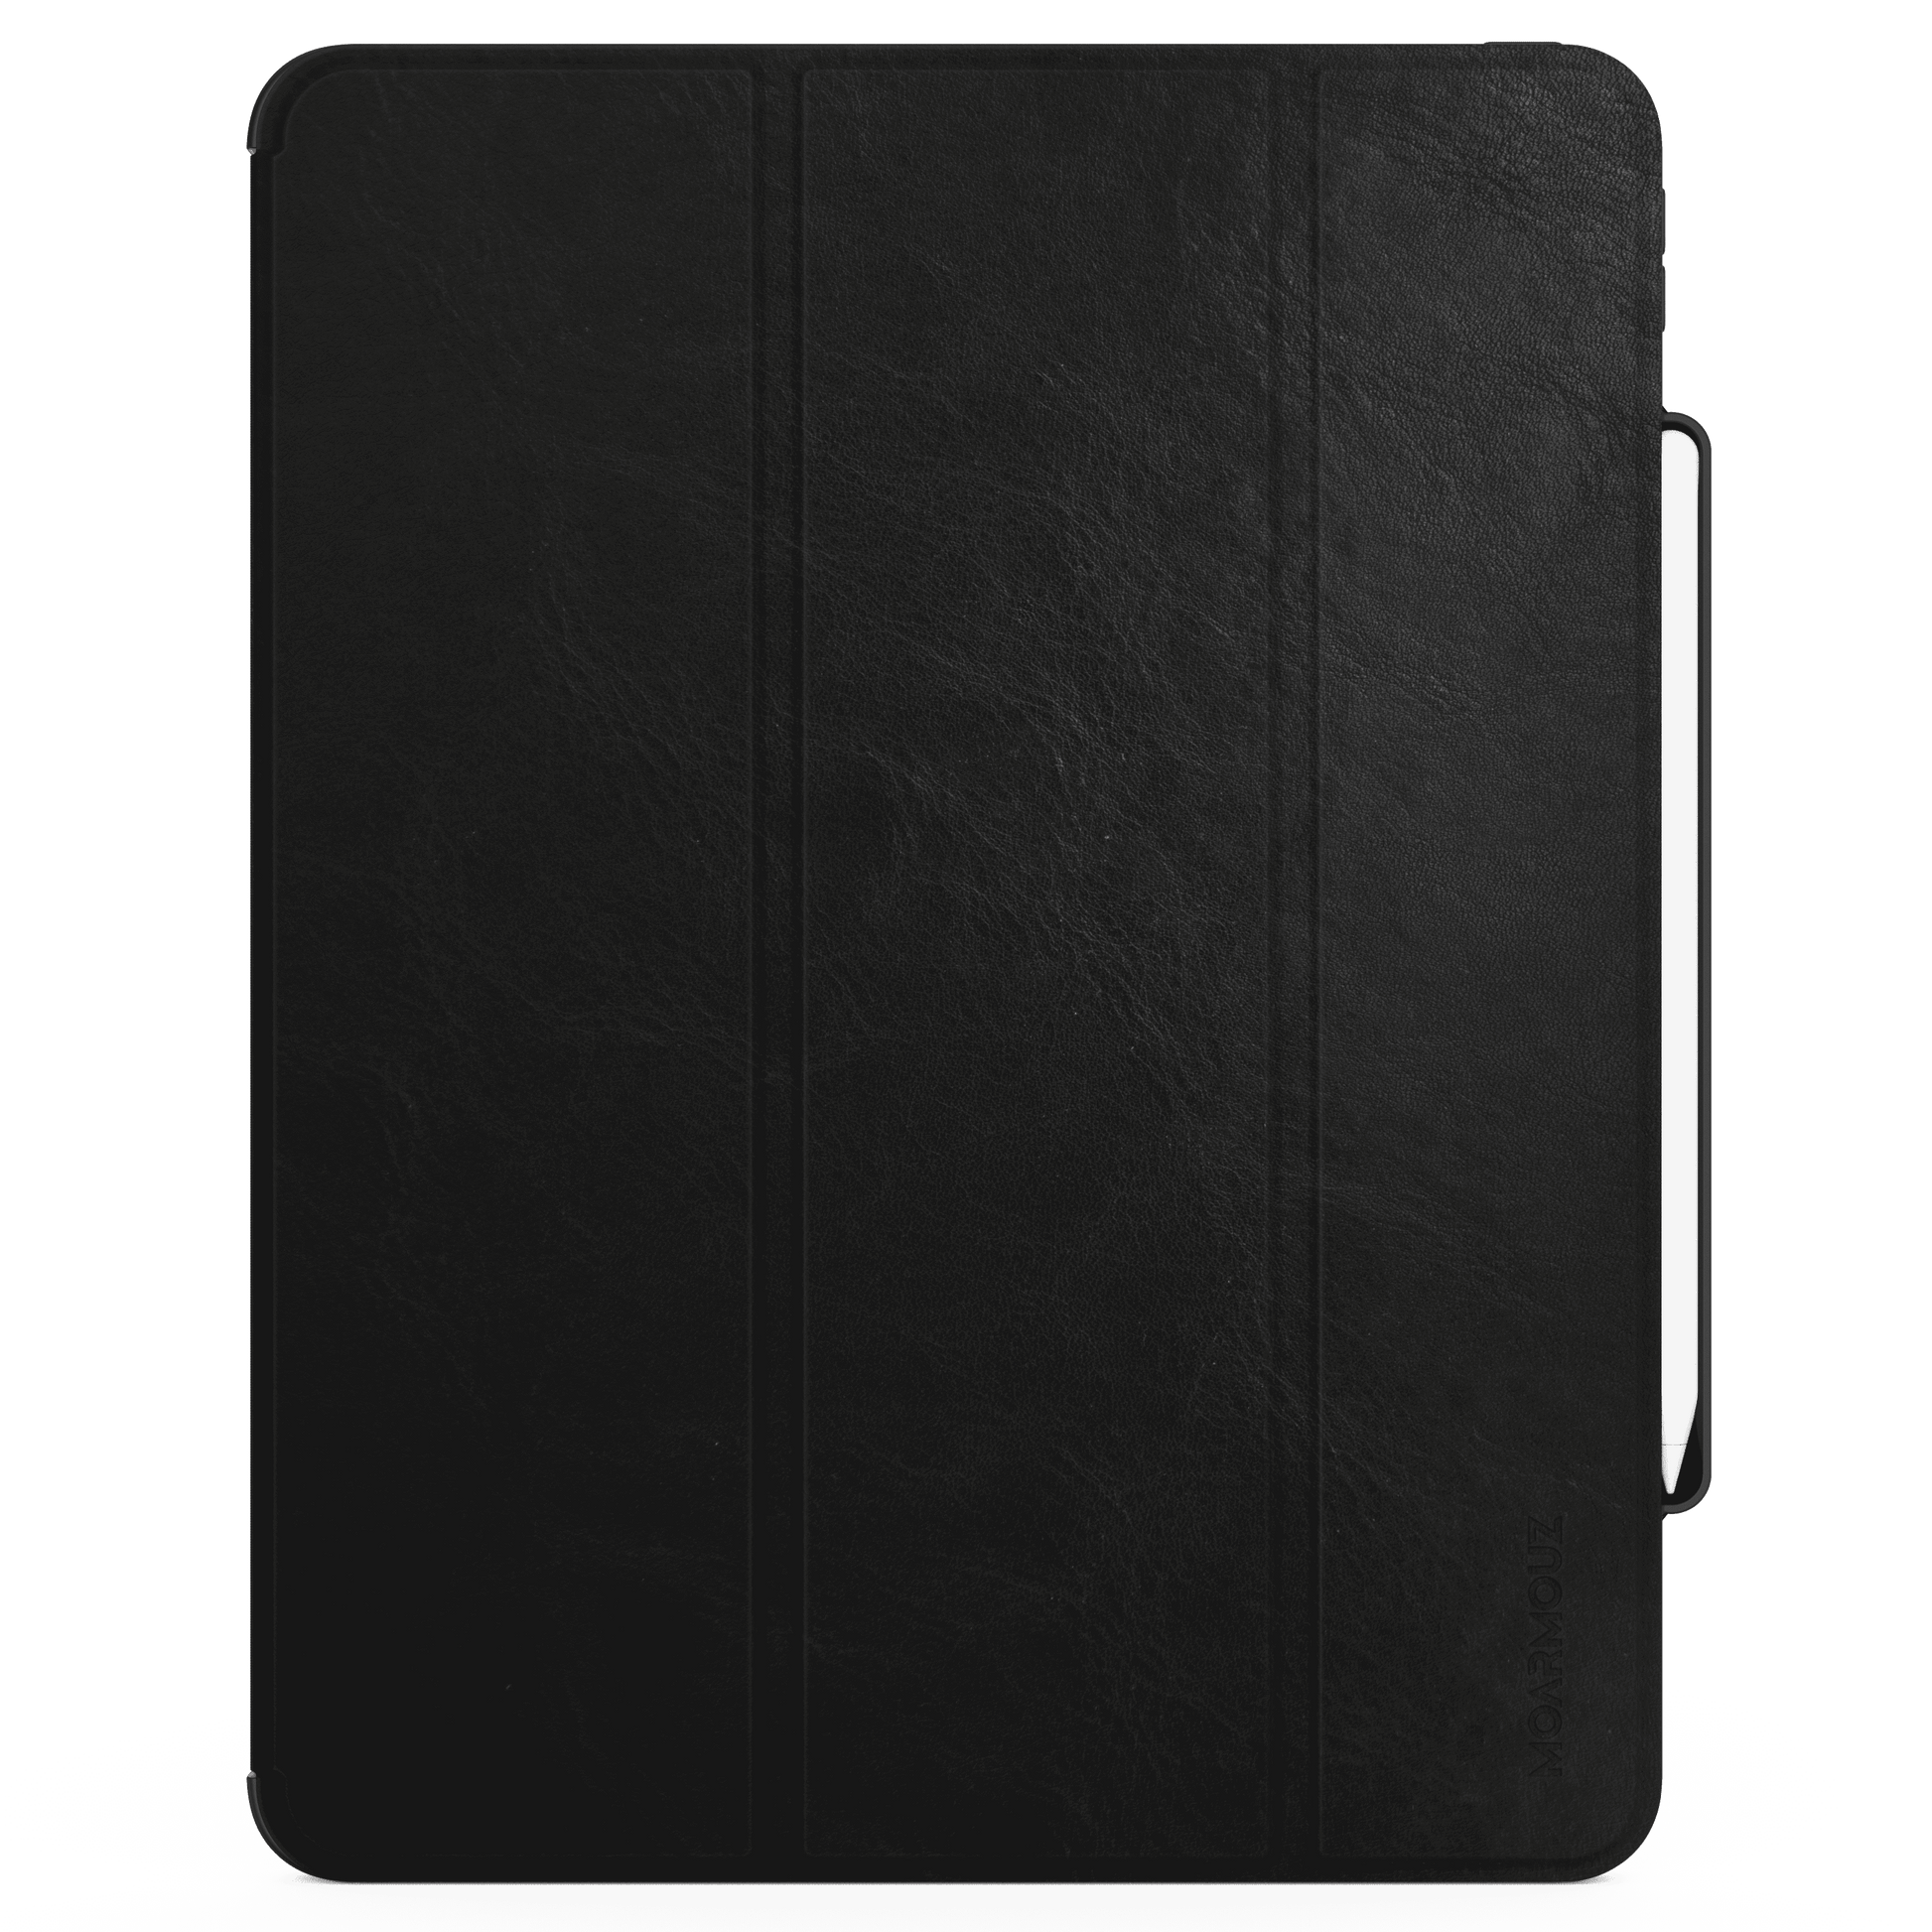 MoArmouz - Folio Smart Cover for iPad Pro 12.9-inch (2018) [Support Apple Pencil Charging]